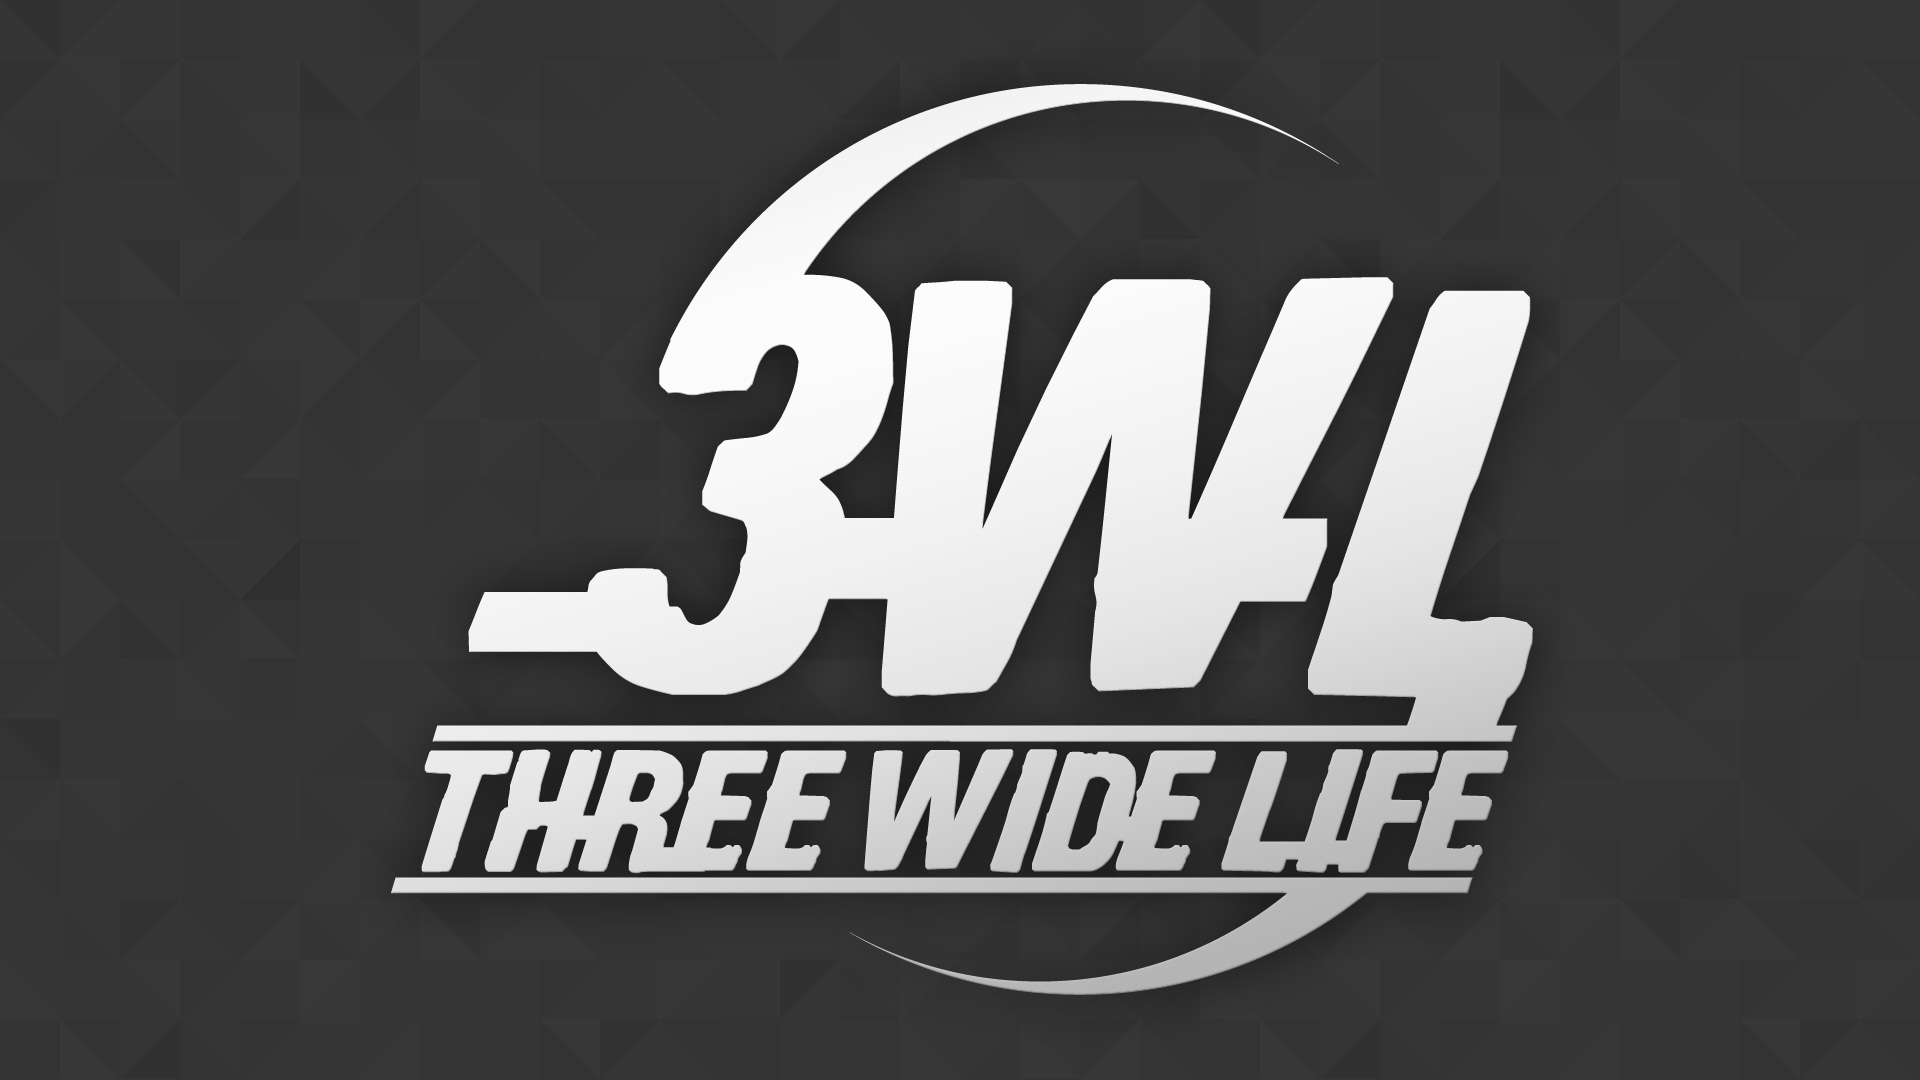 Three Wide Life – logo